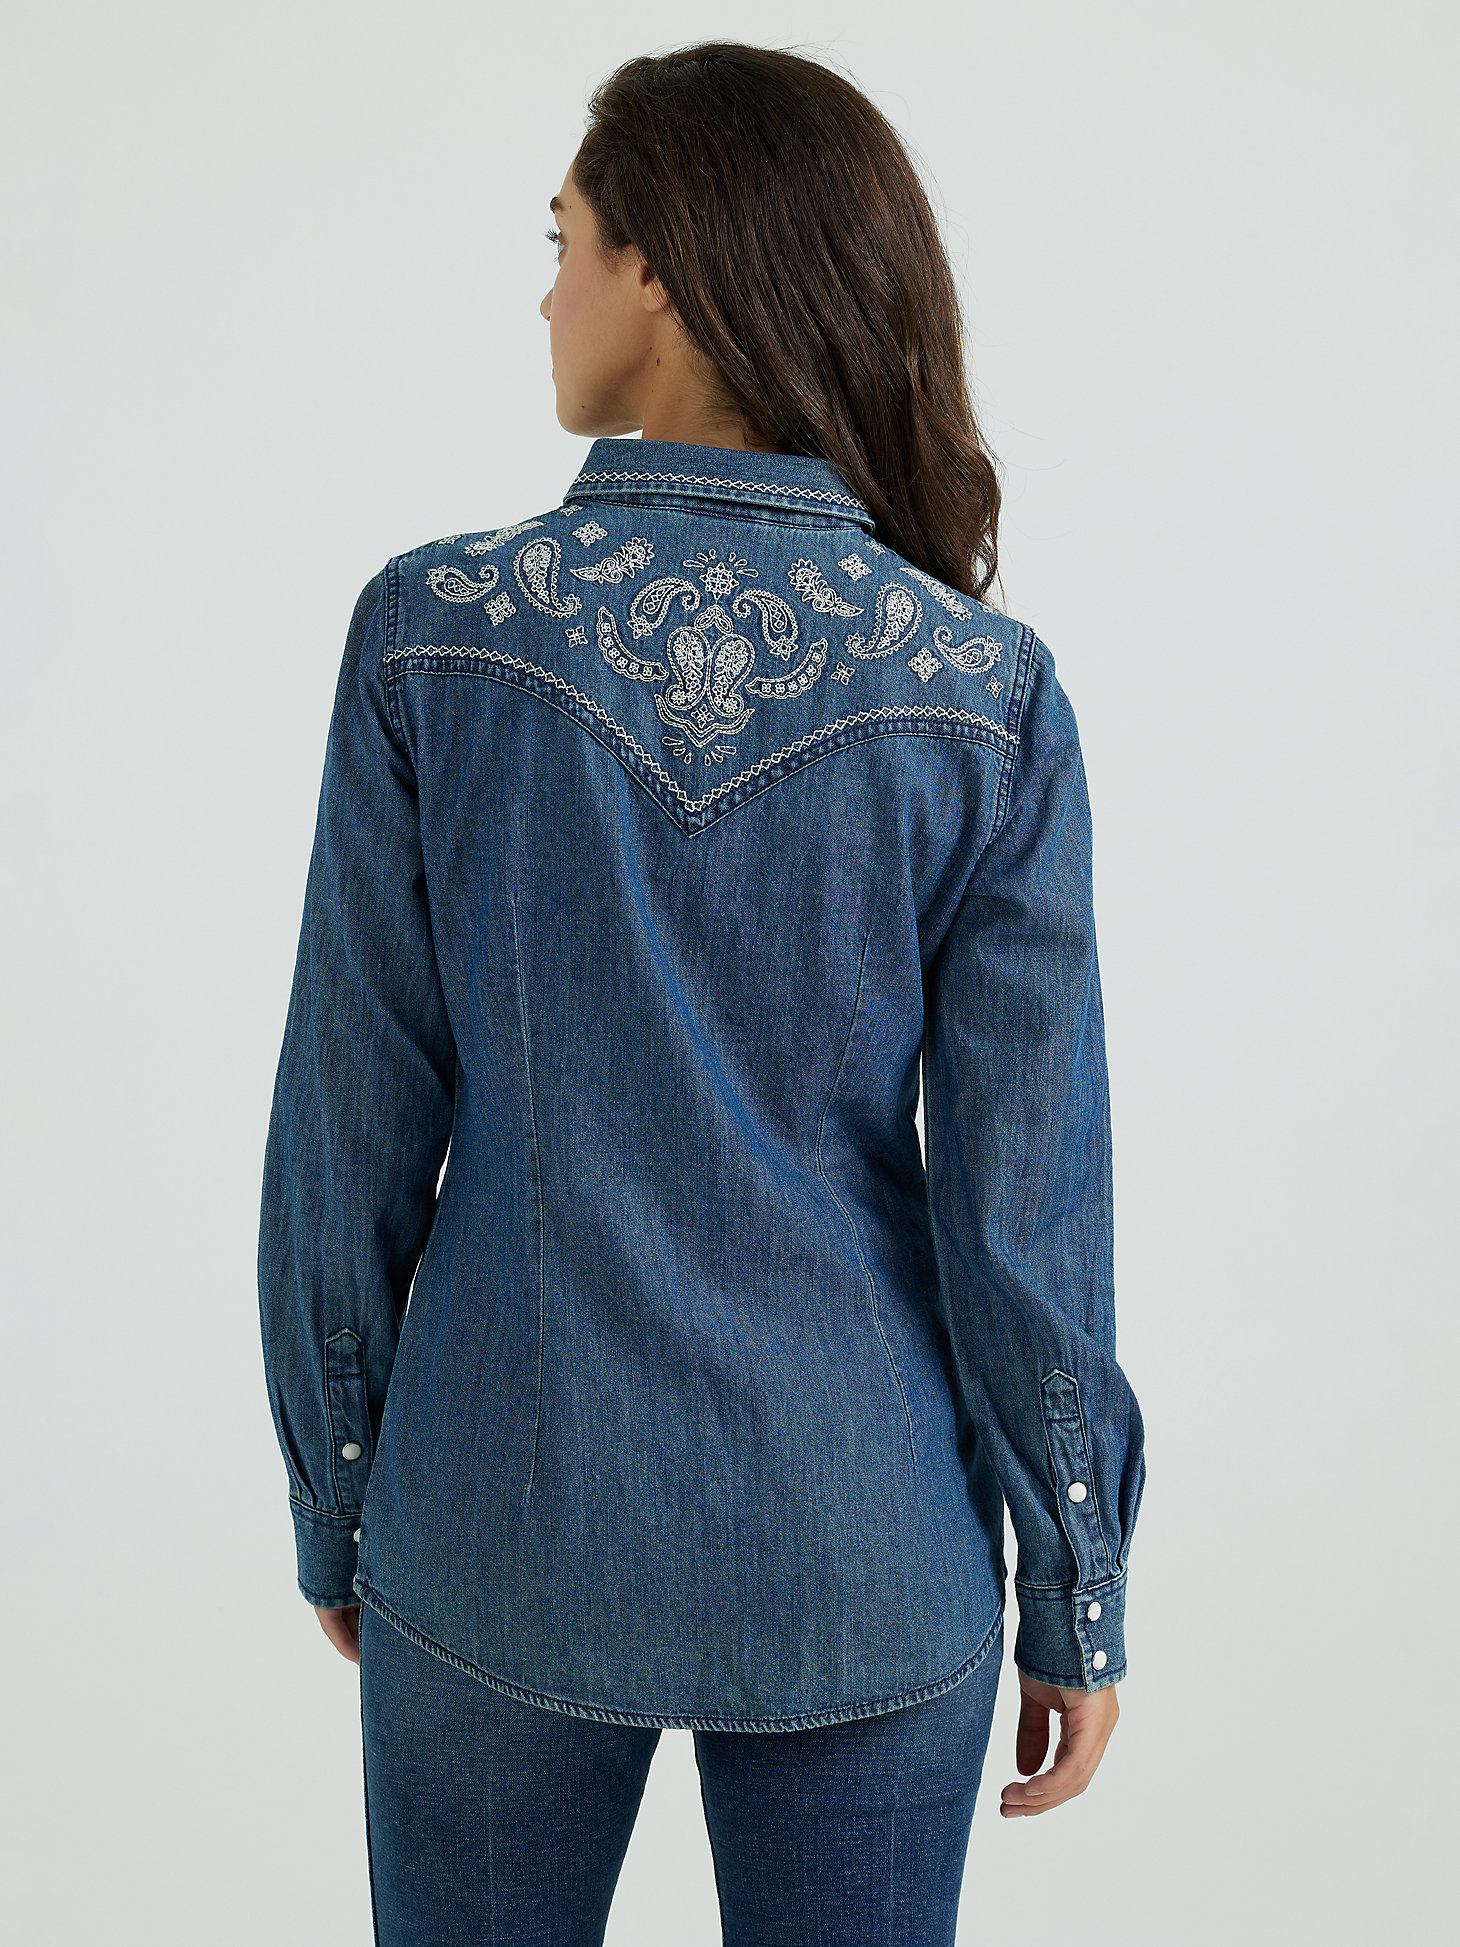 Women's Wrangler Embroidered Yoke Denim Snap Shirt in Indigo alternative view 1